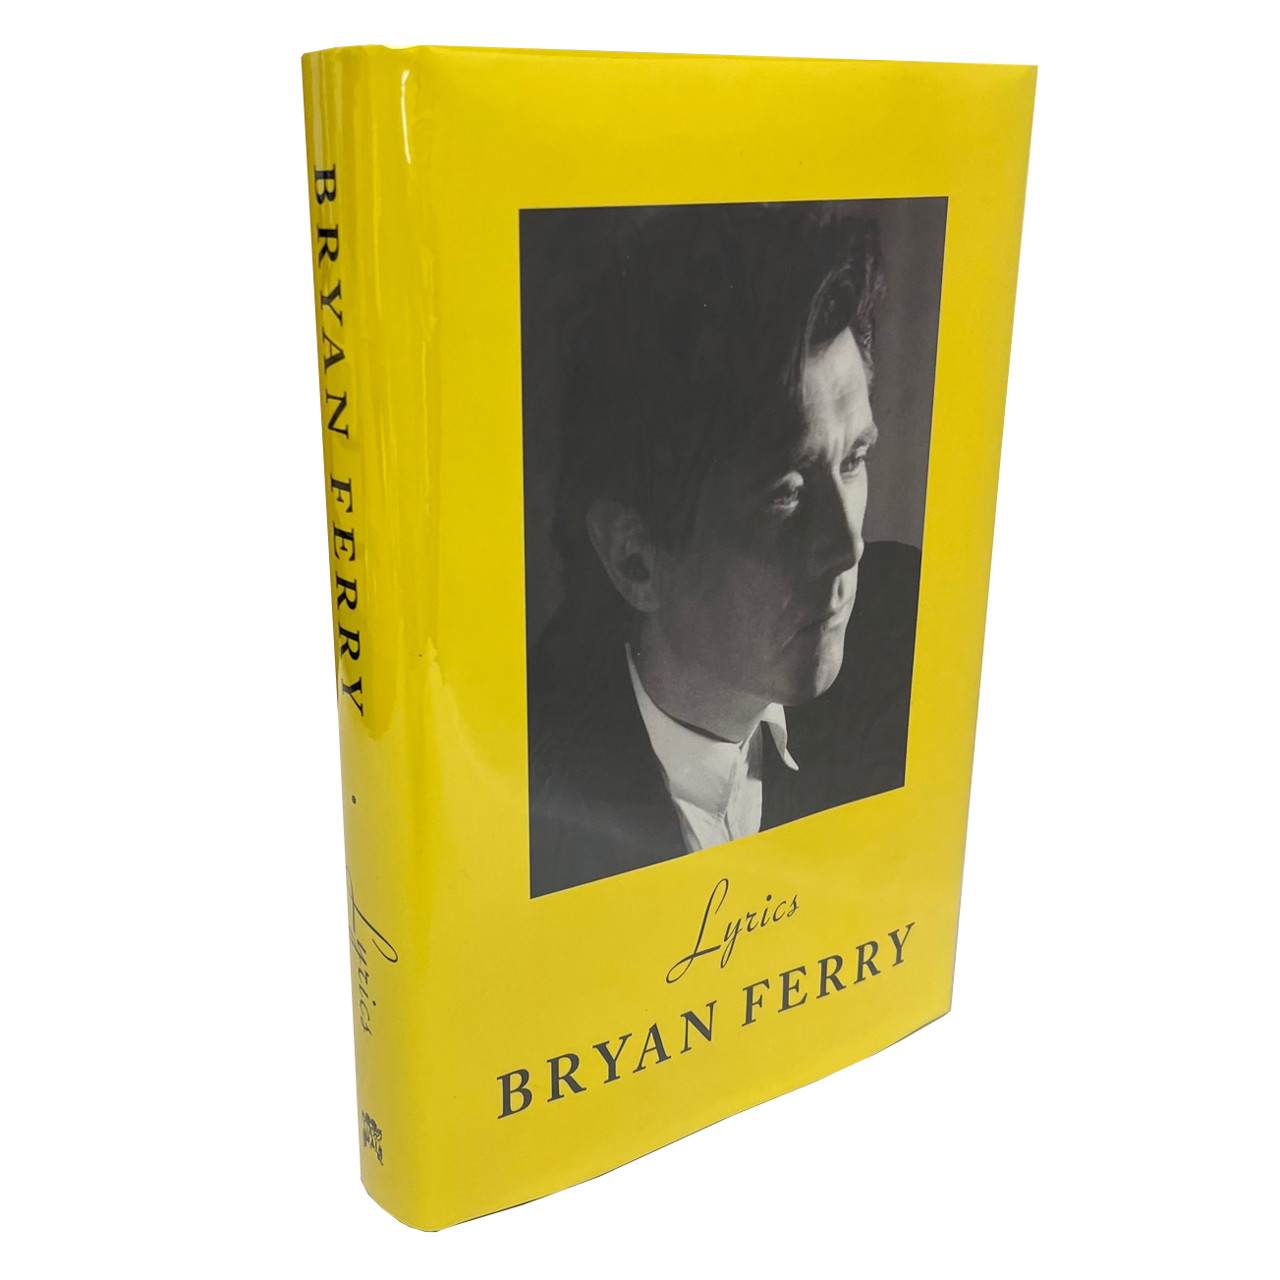 Bryan Ferry "Lyrics" UK Signed First Edition w/COA [Fine/Fine]